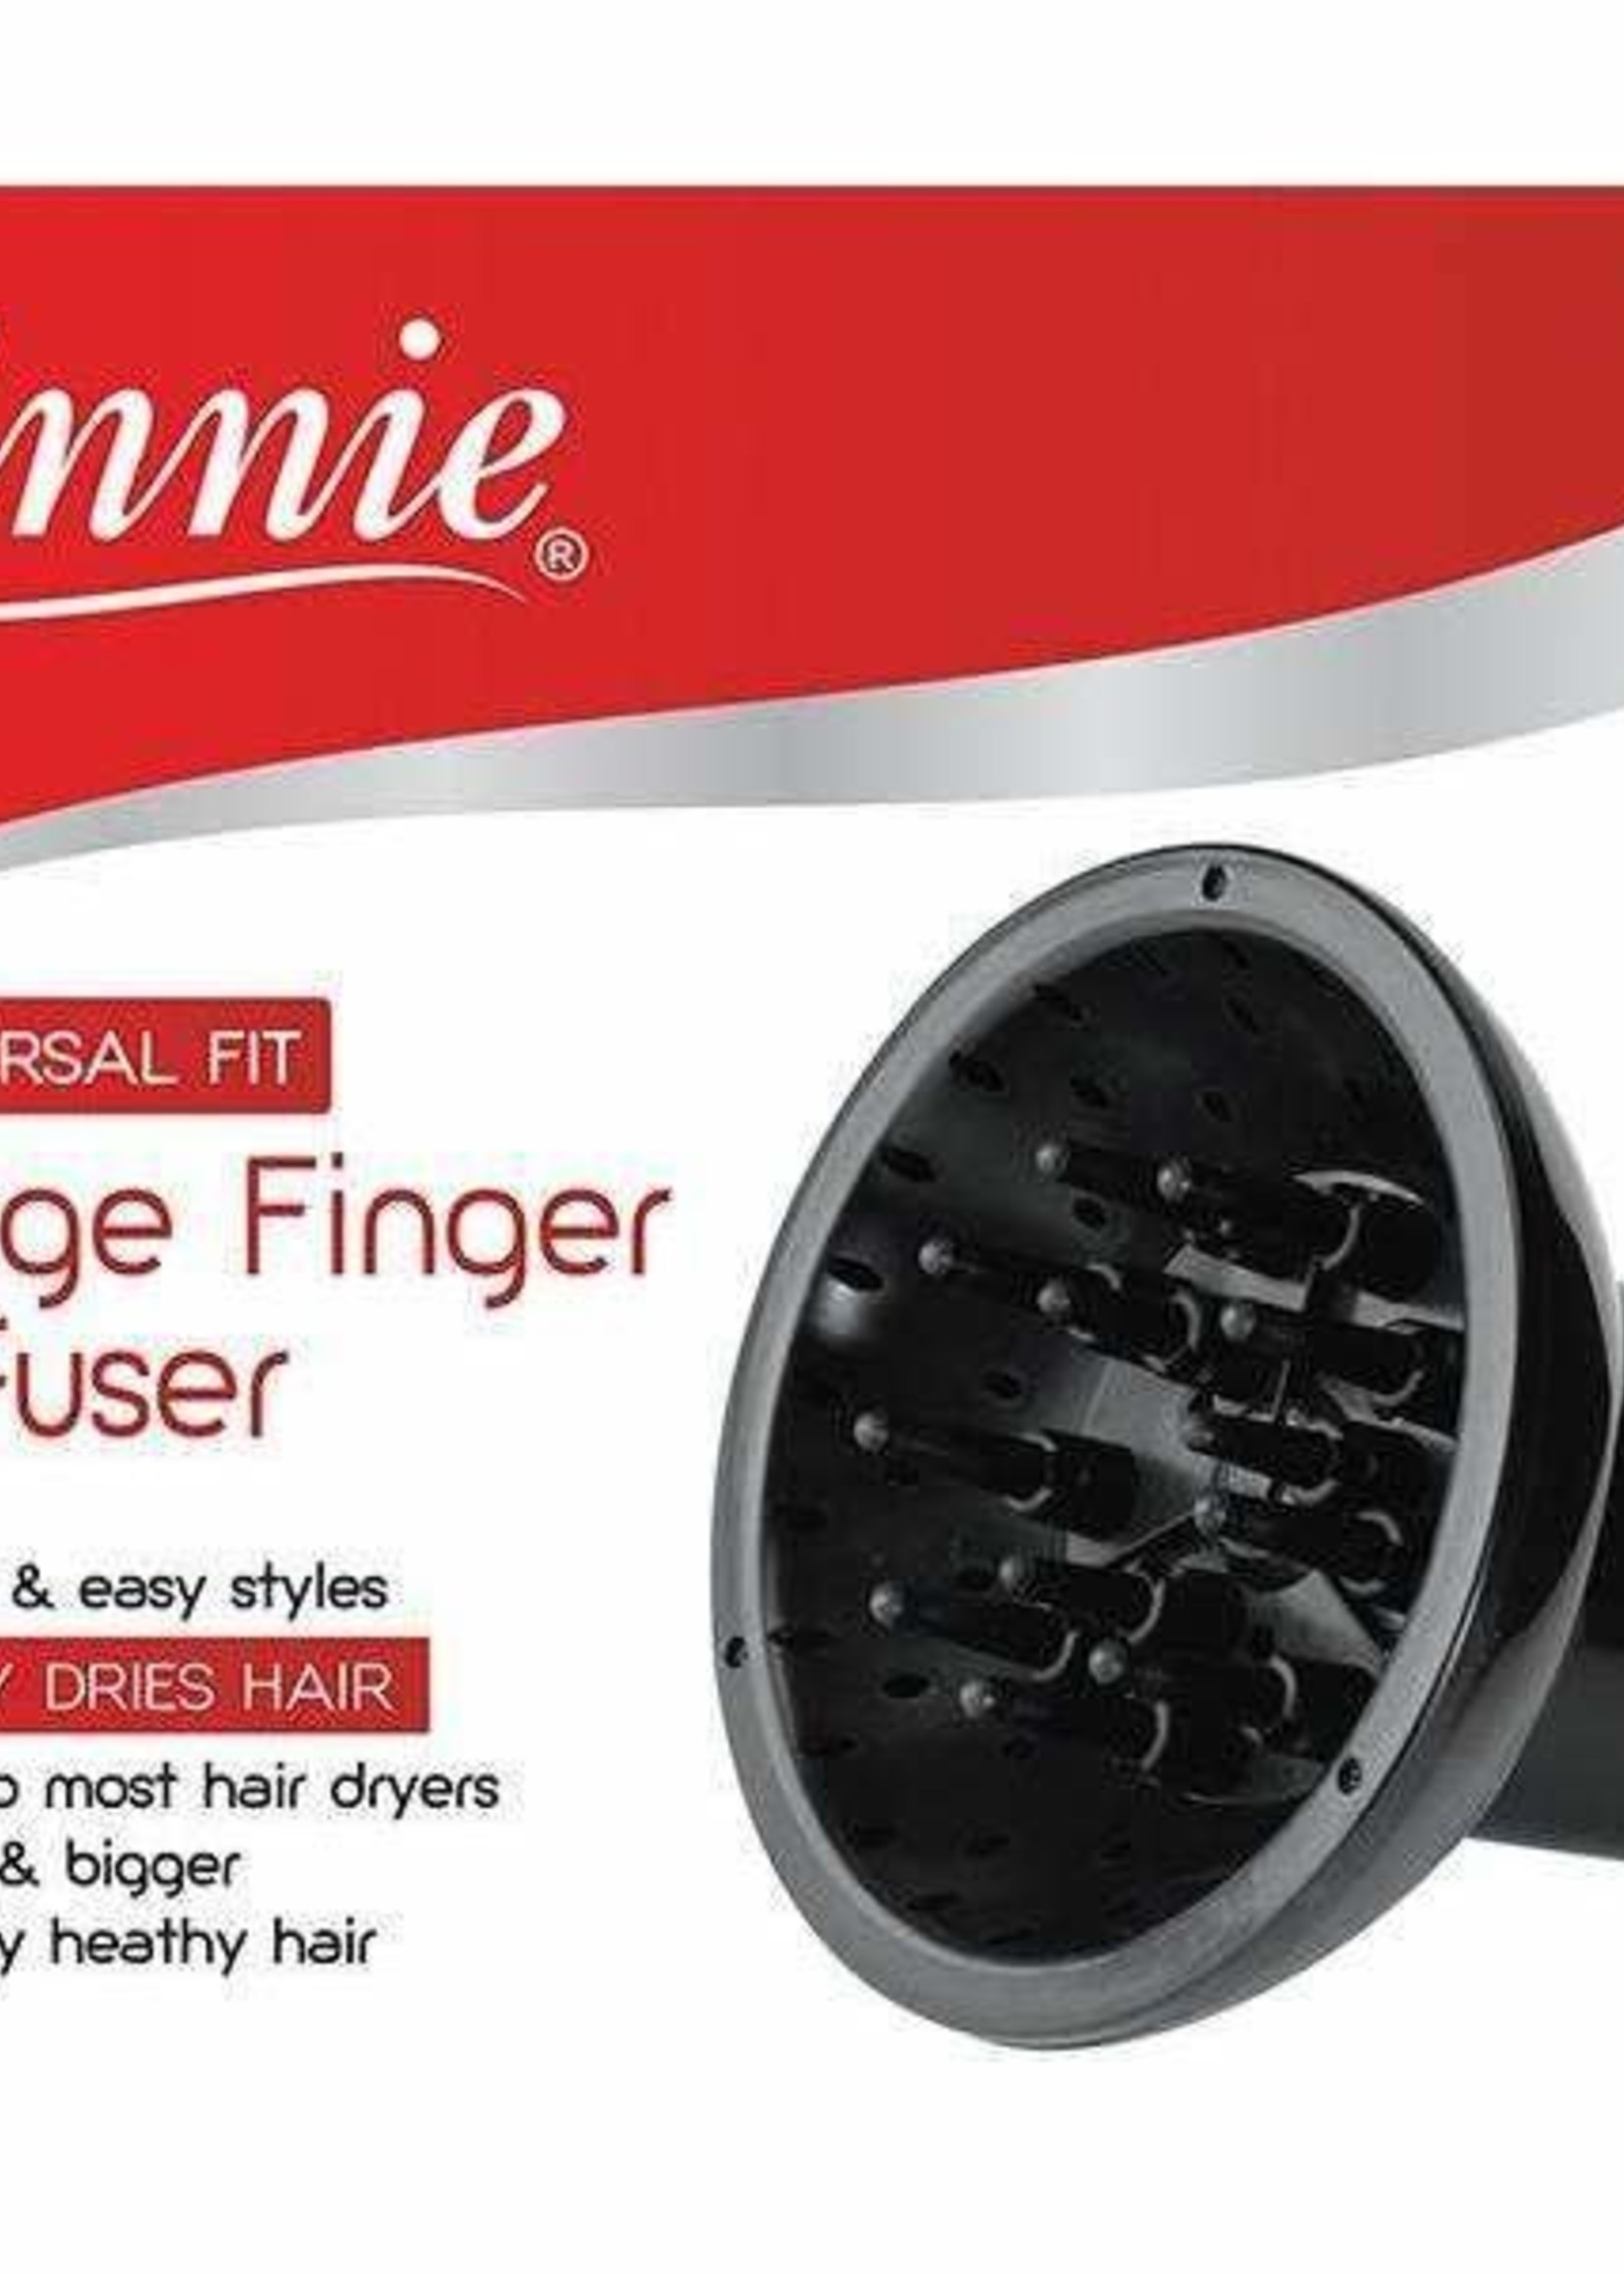 Annie Large Finger Diffuser